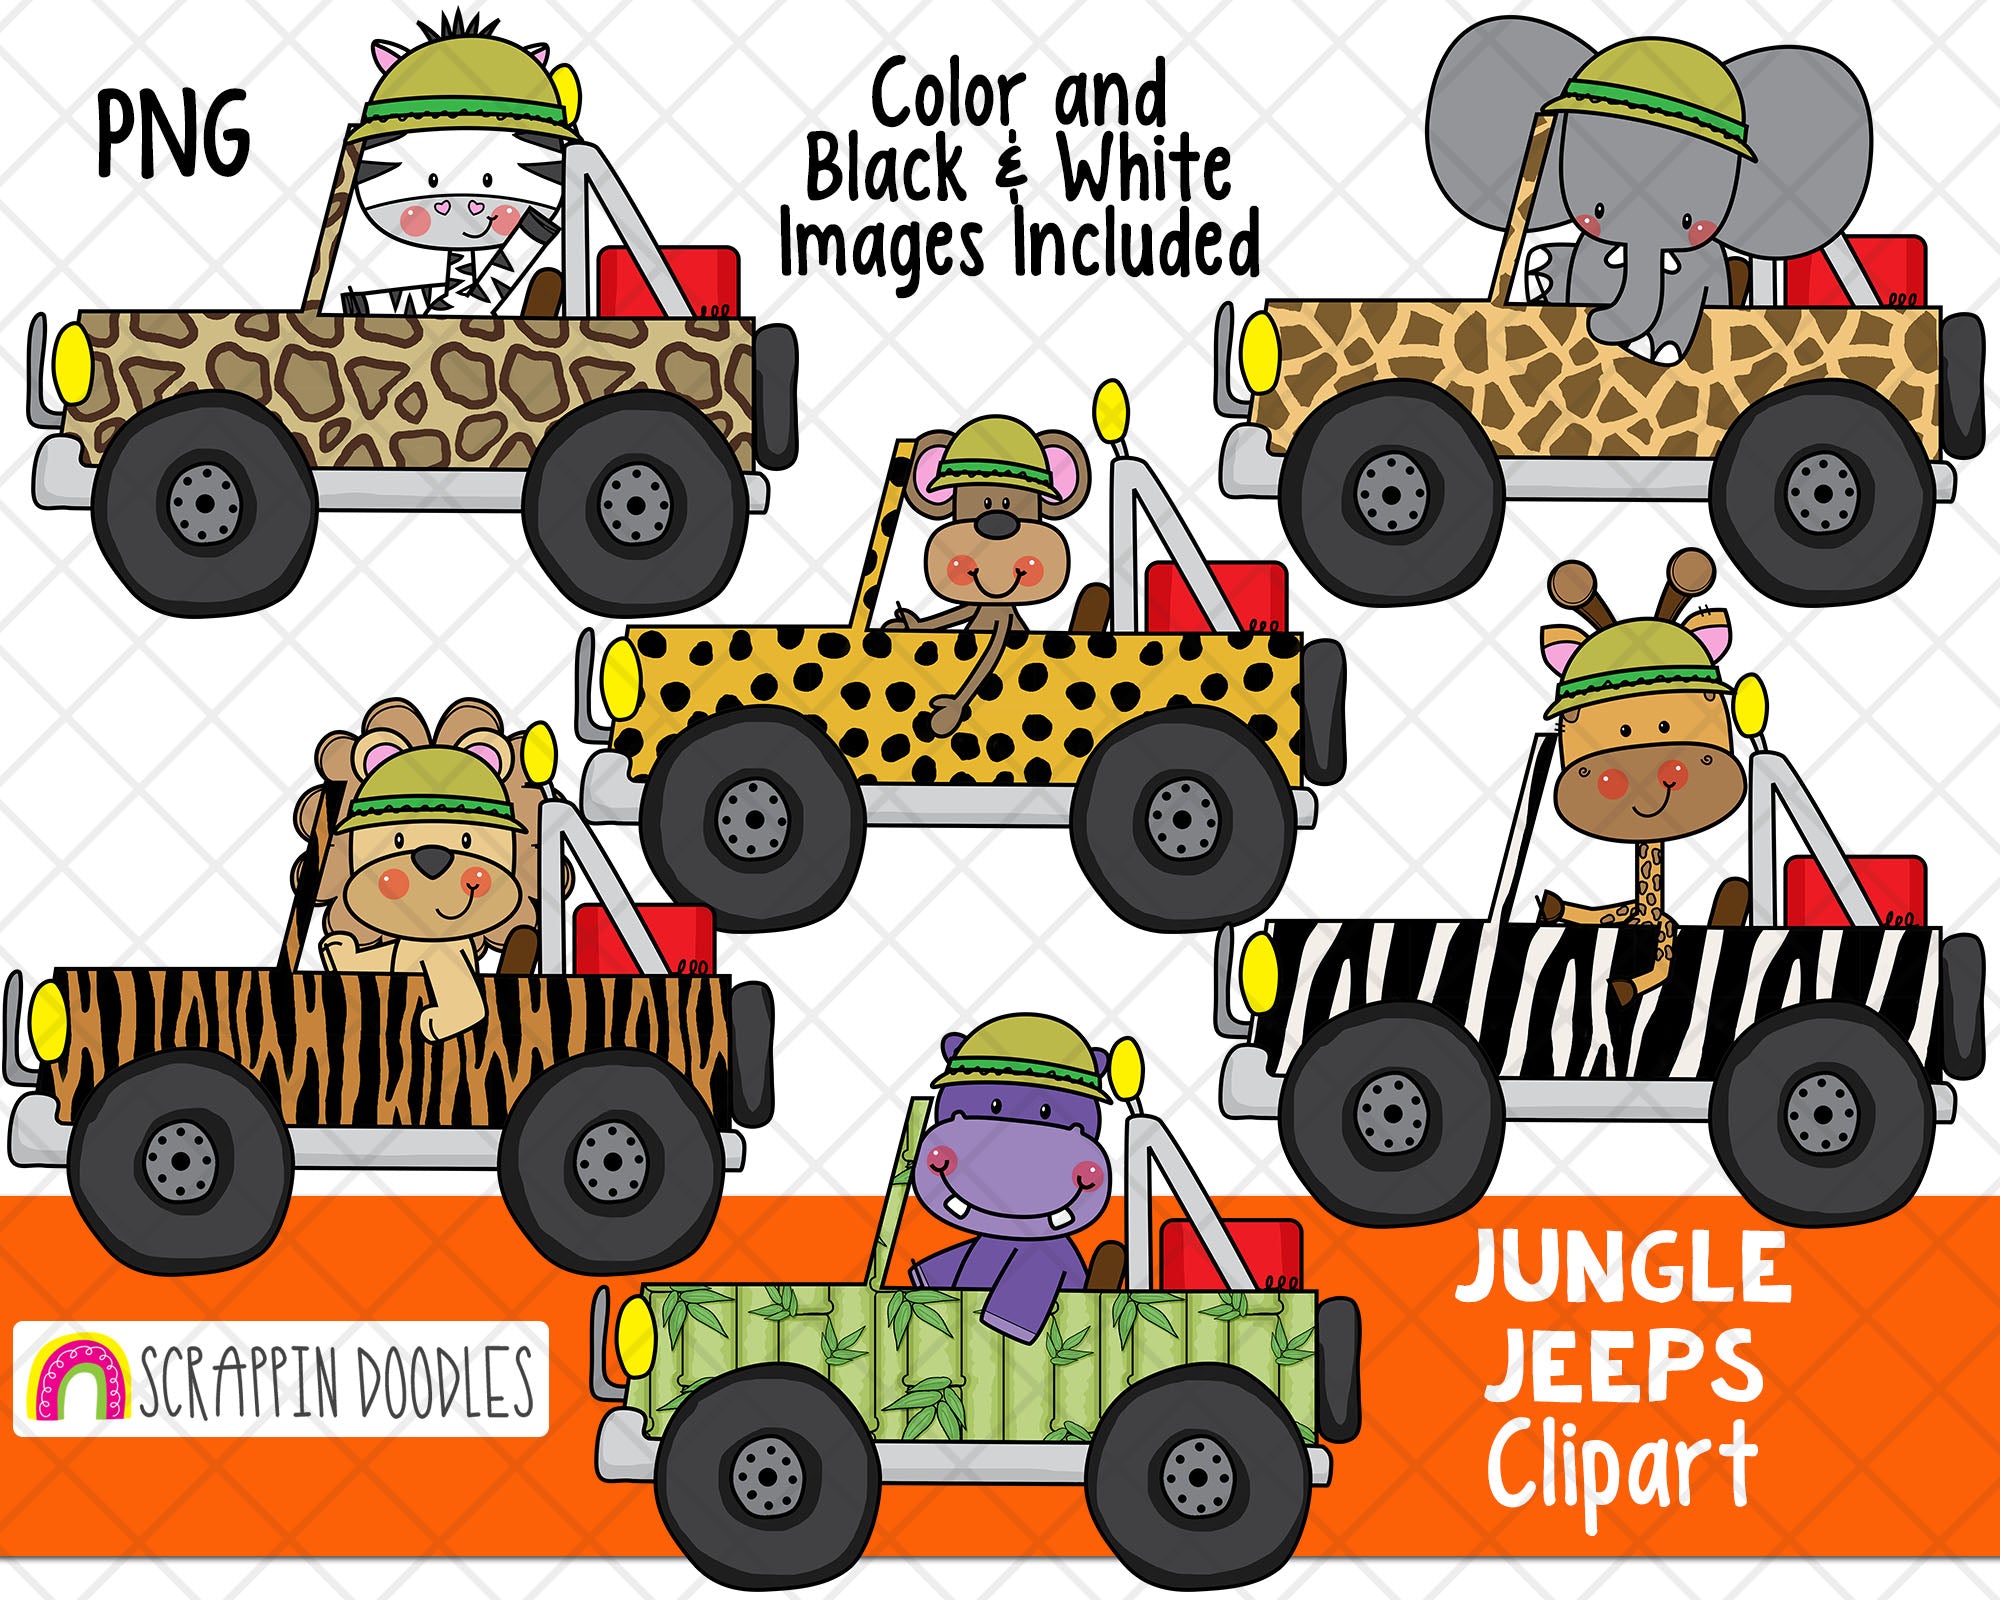 Jungle animals, printable digital clipart set